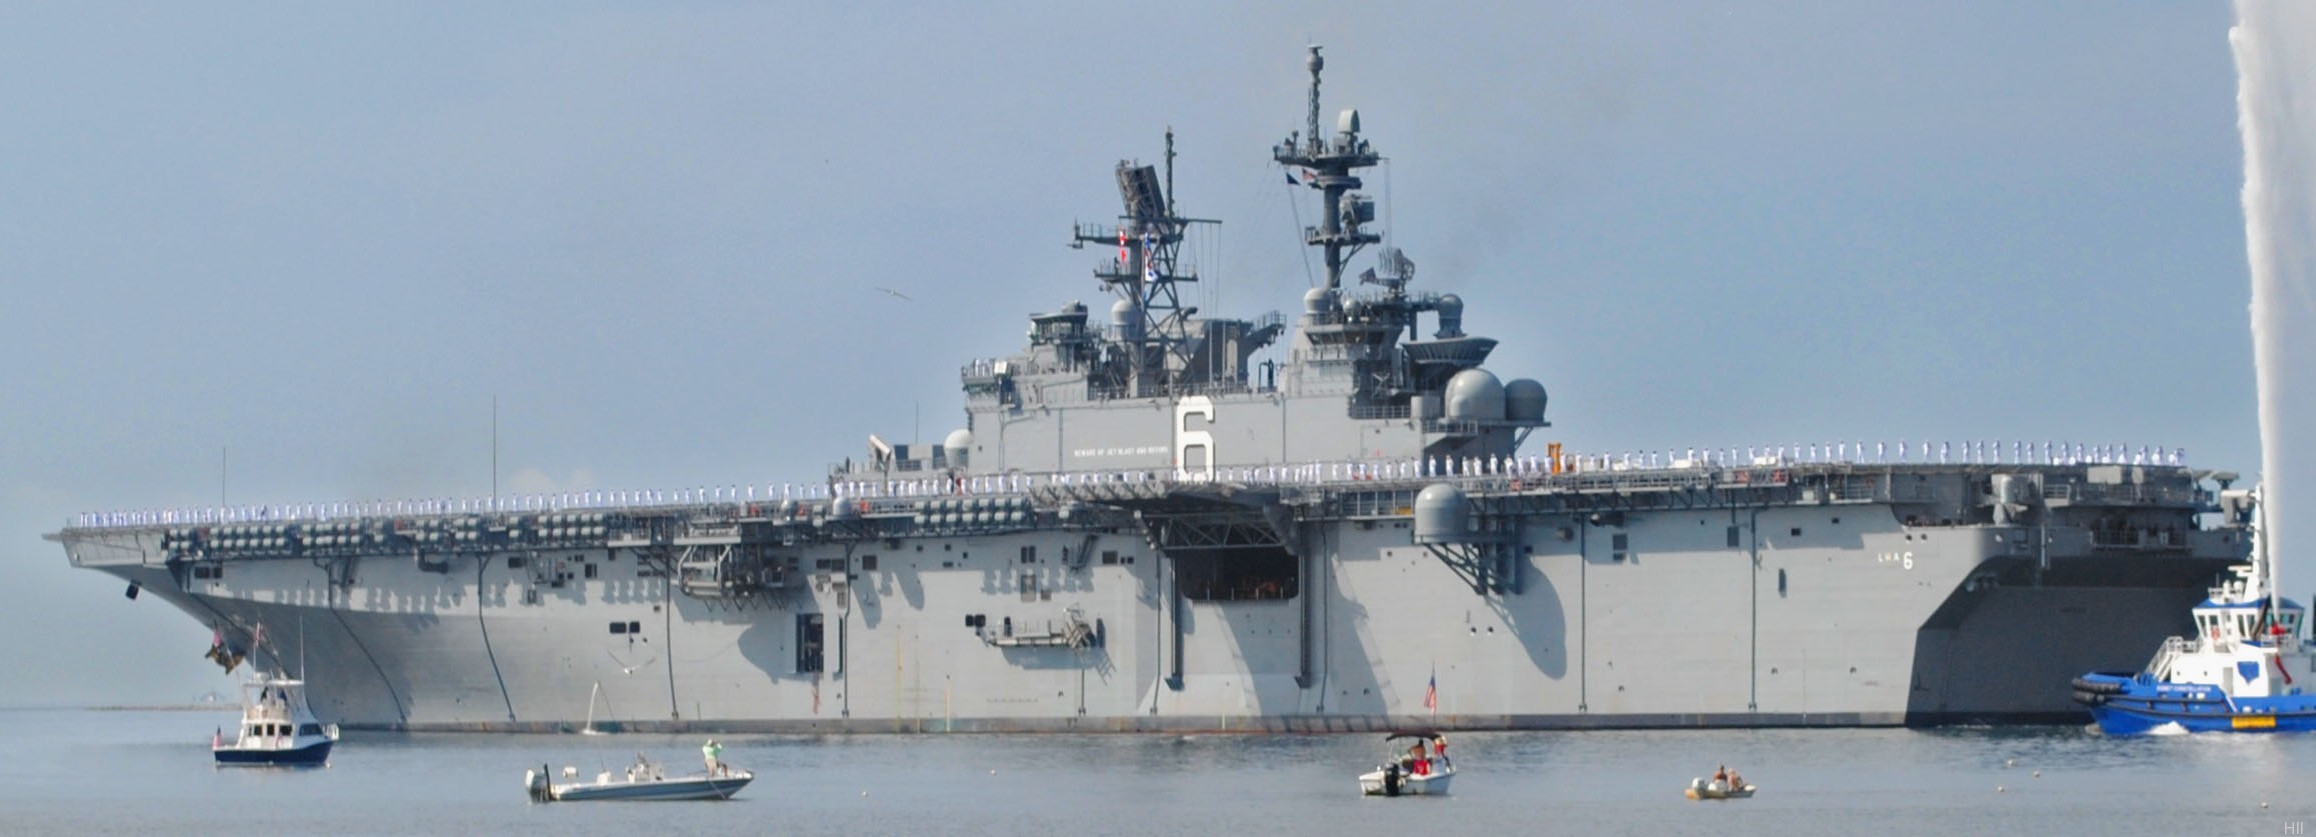 lha-6 uss america amphibious assault ship us navy 83 departing pascagoula mississippi hii shipyard